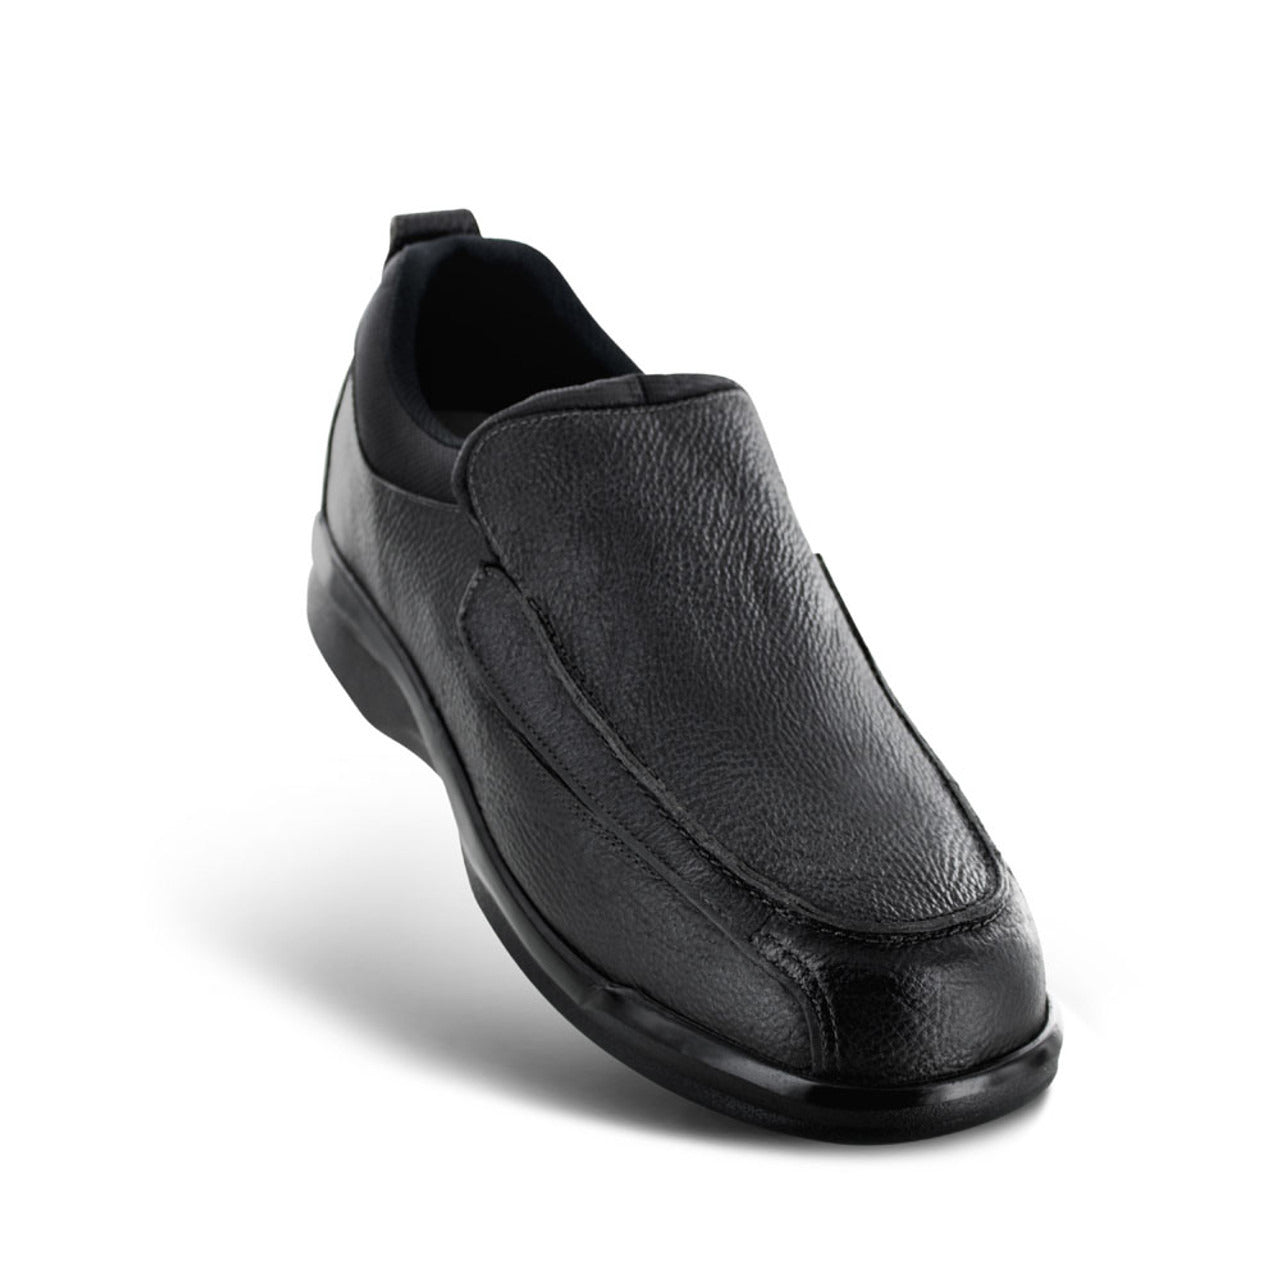 Apexfoot Men's Classic Moc Dress Shoe- Biomechanical - Black - XX-Wide (6E)